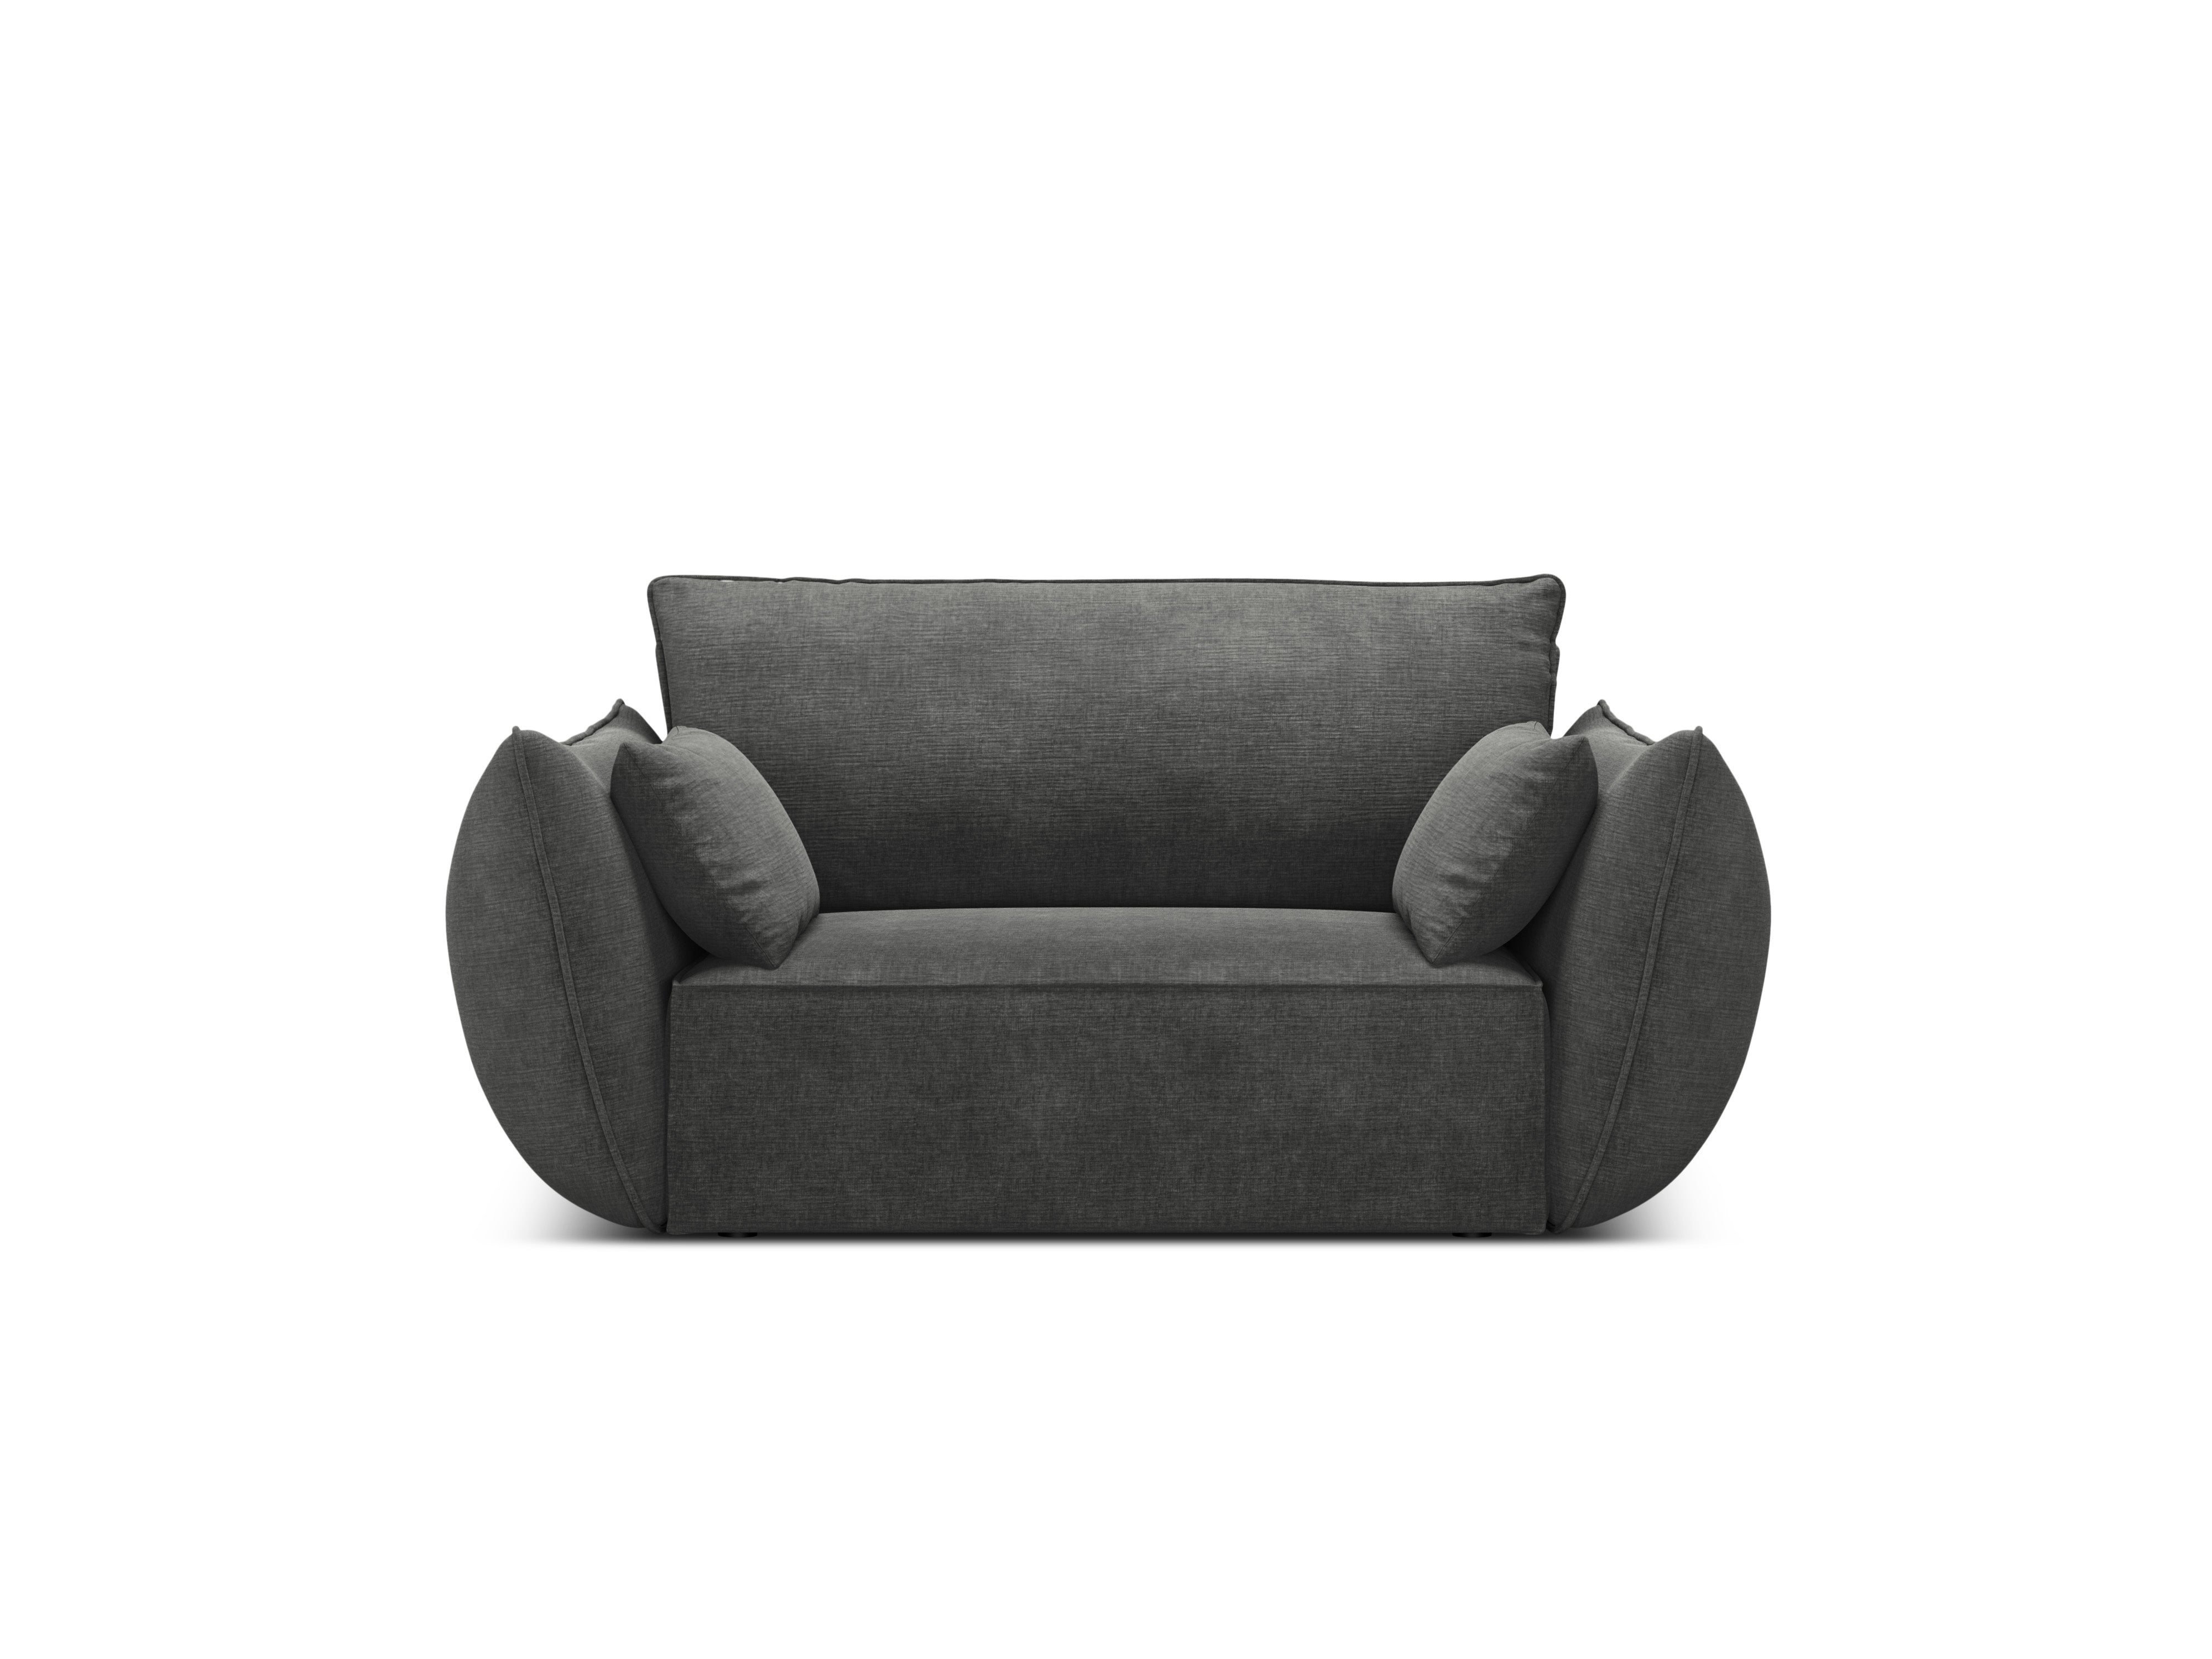 Armchair, "Vanda", 1 Seat, 128x100x85
Made in Europe, Mazzini Sofas, Eye on Design